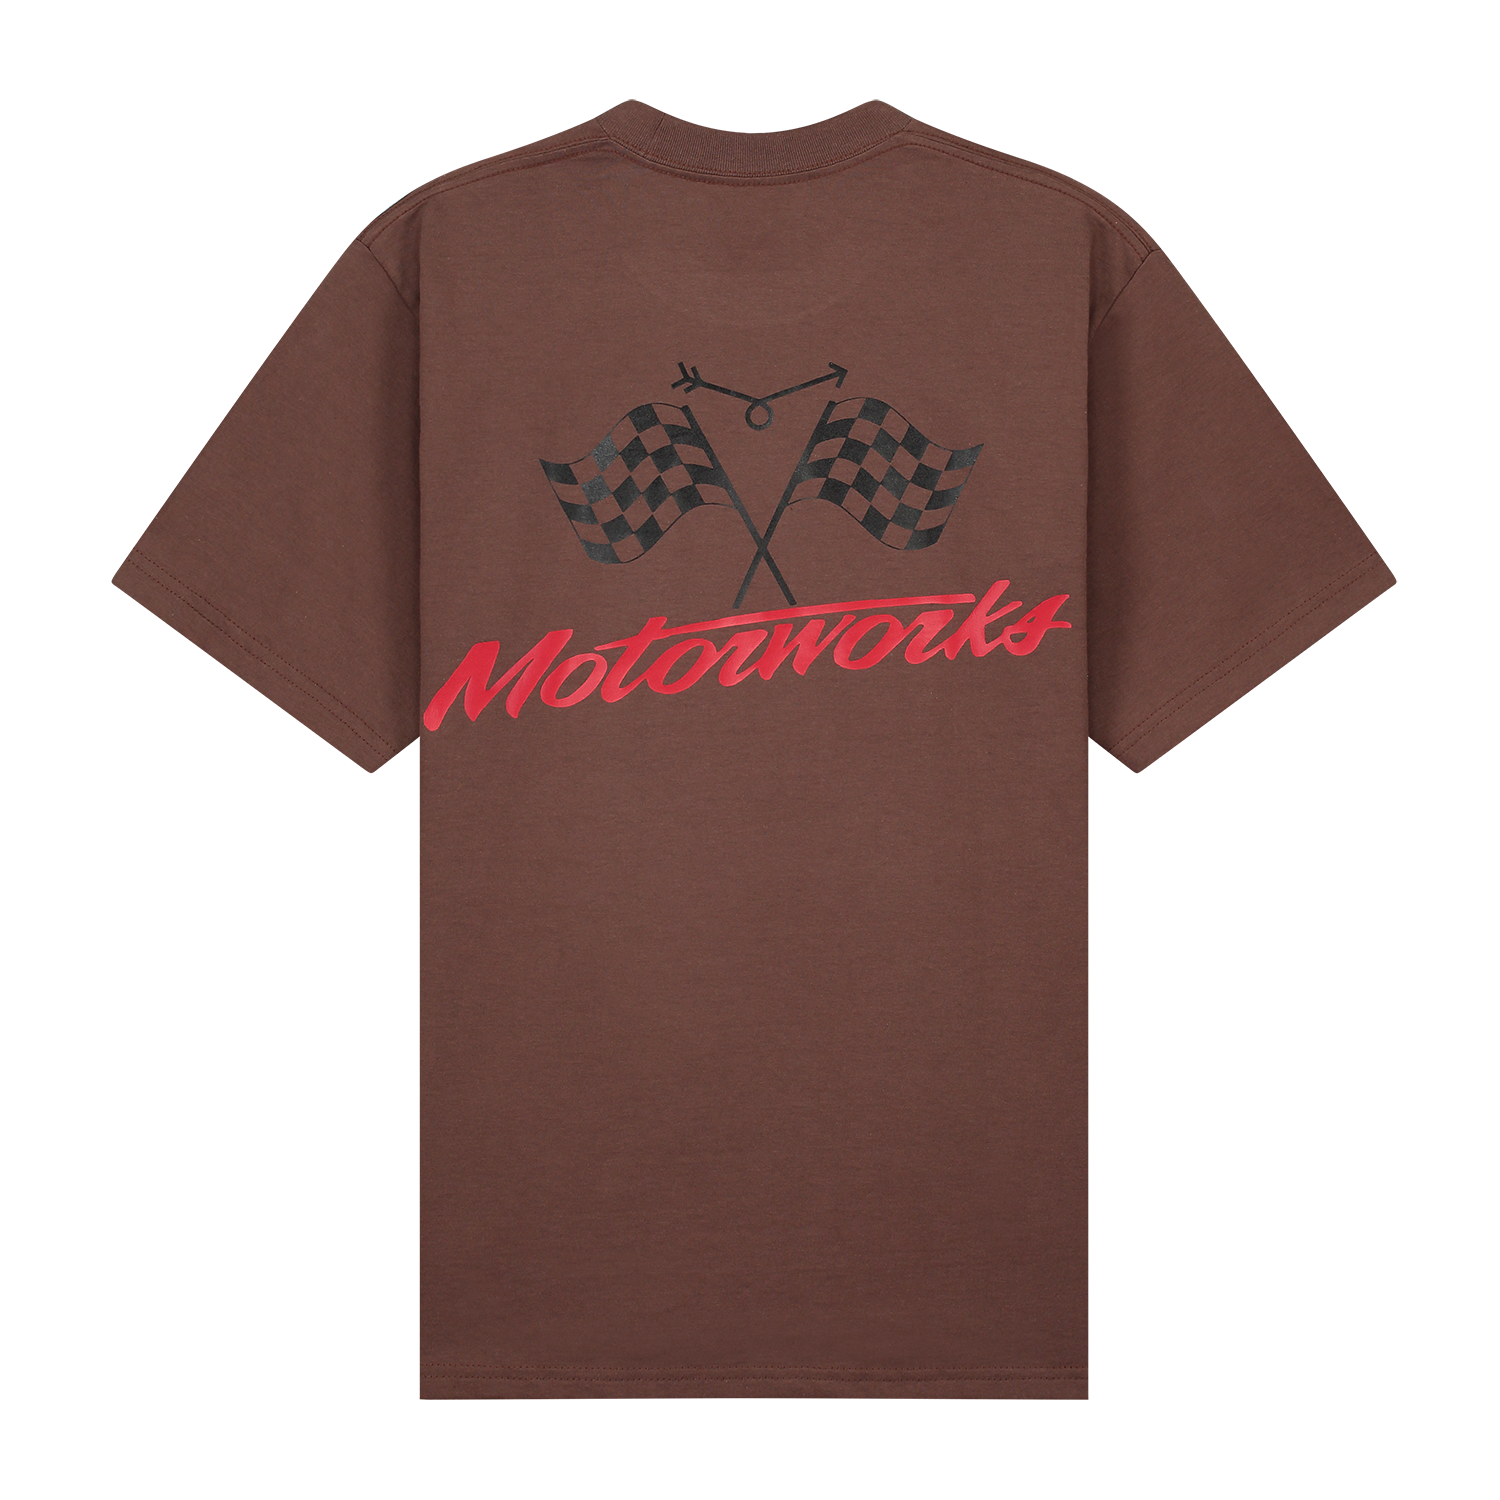 Motoworks T-shirt Brown